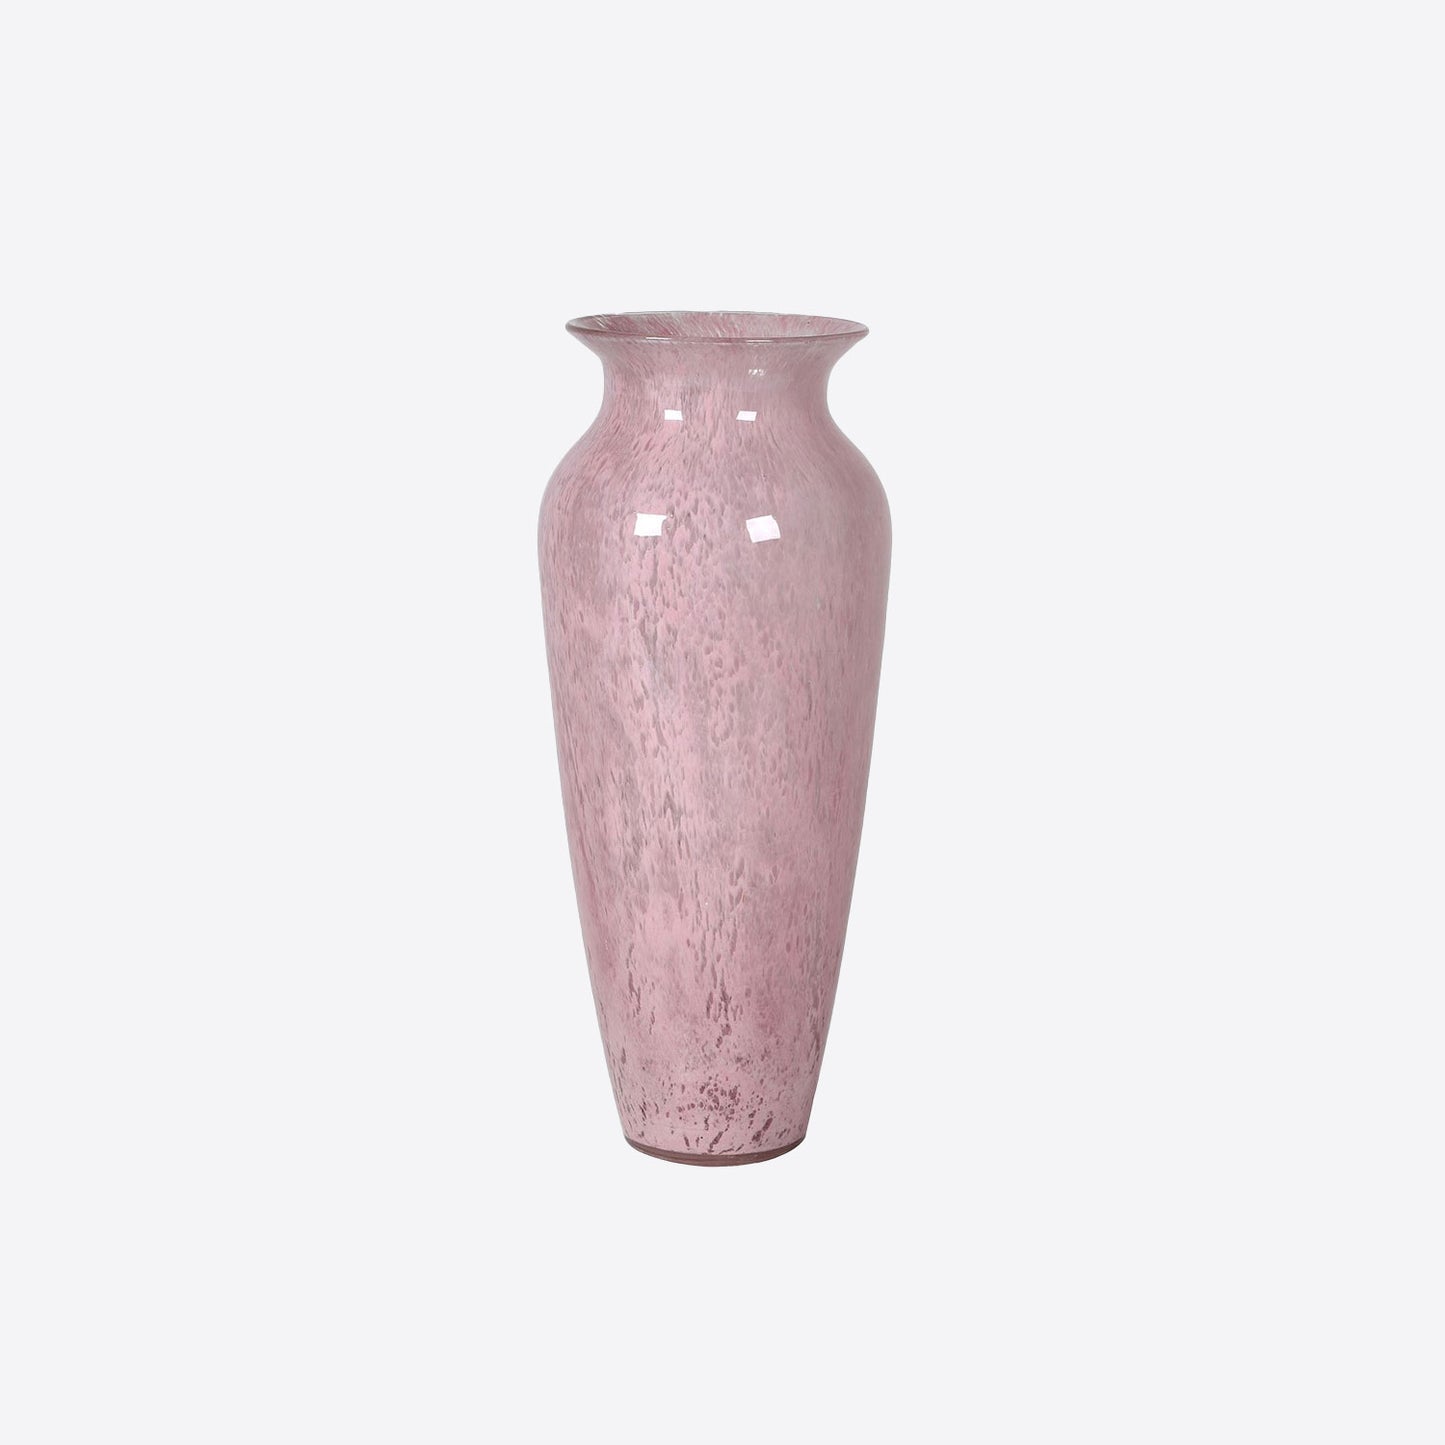 Pink Speckled Vase Not specified